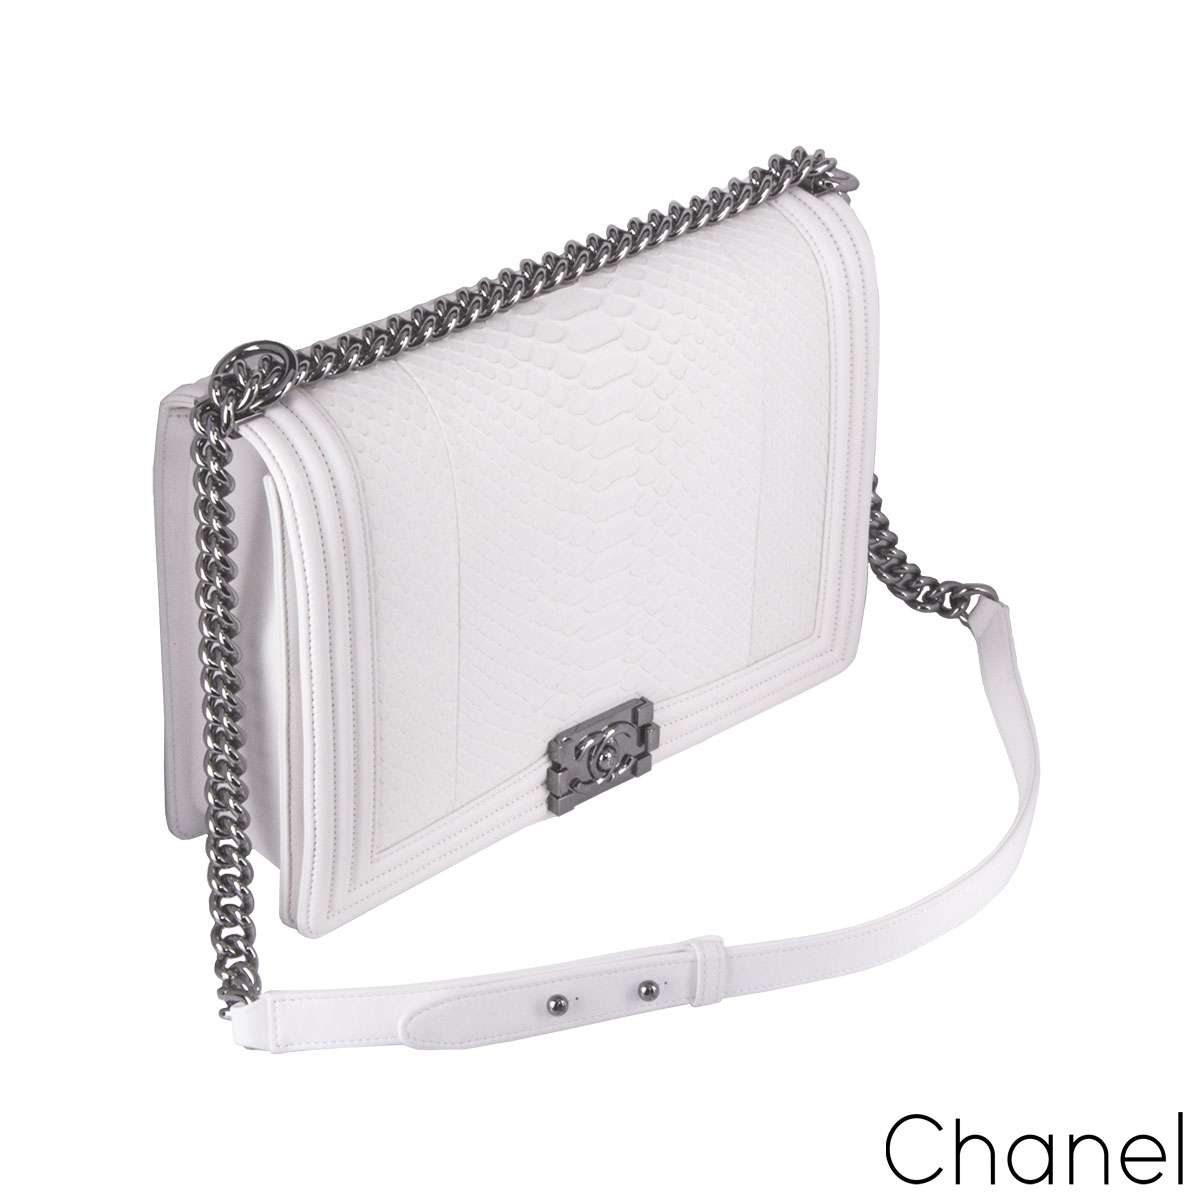 Chanel White Python Large Boy Bag